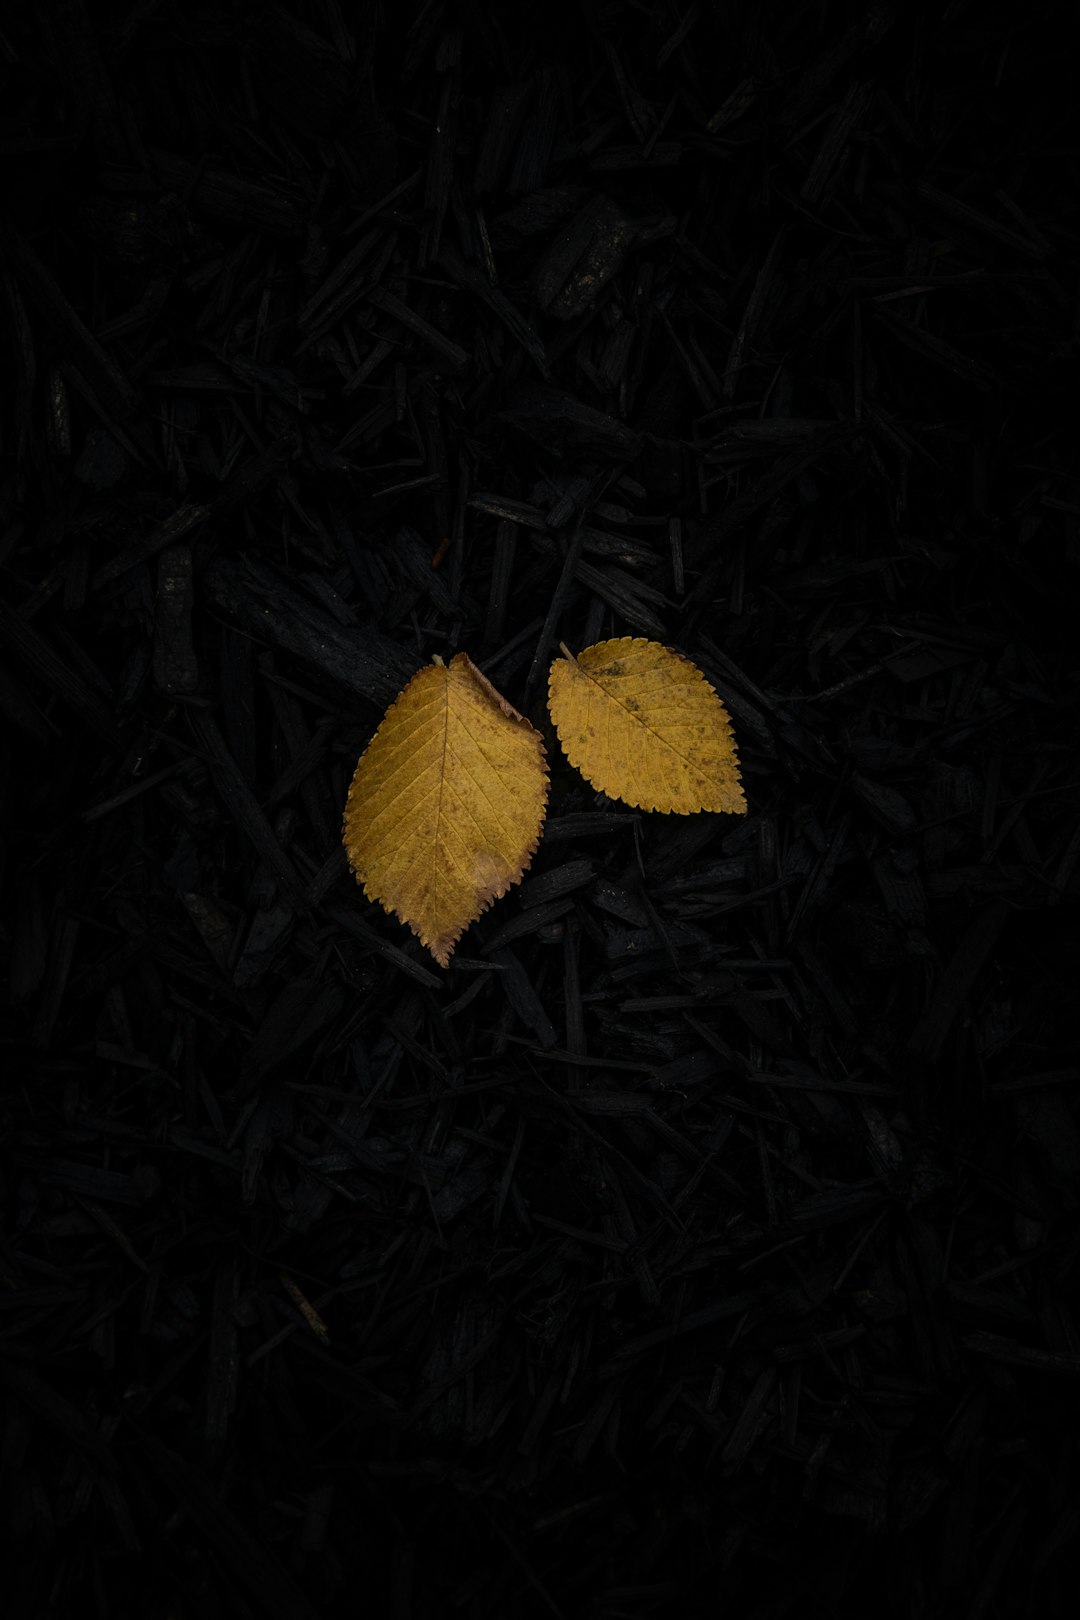 brown dried leaf on black surface